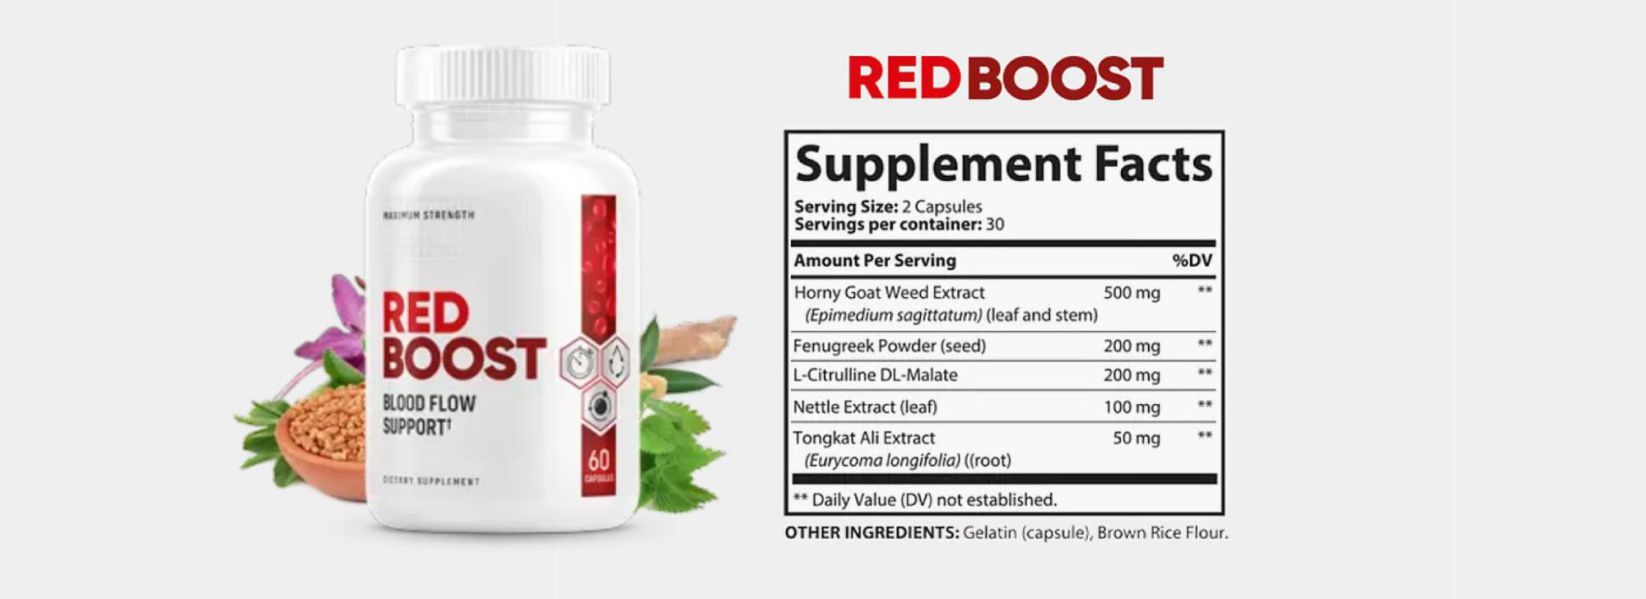 Red-Boost-Supplement-Ingredients